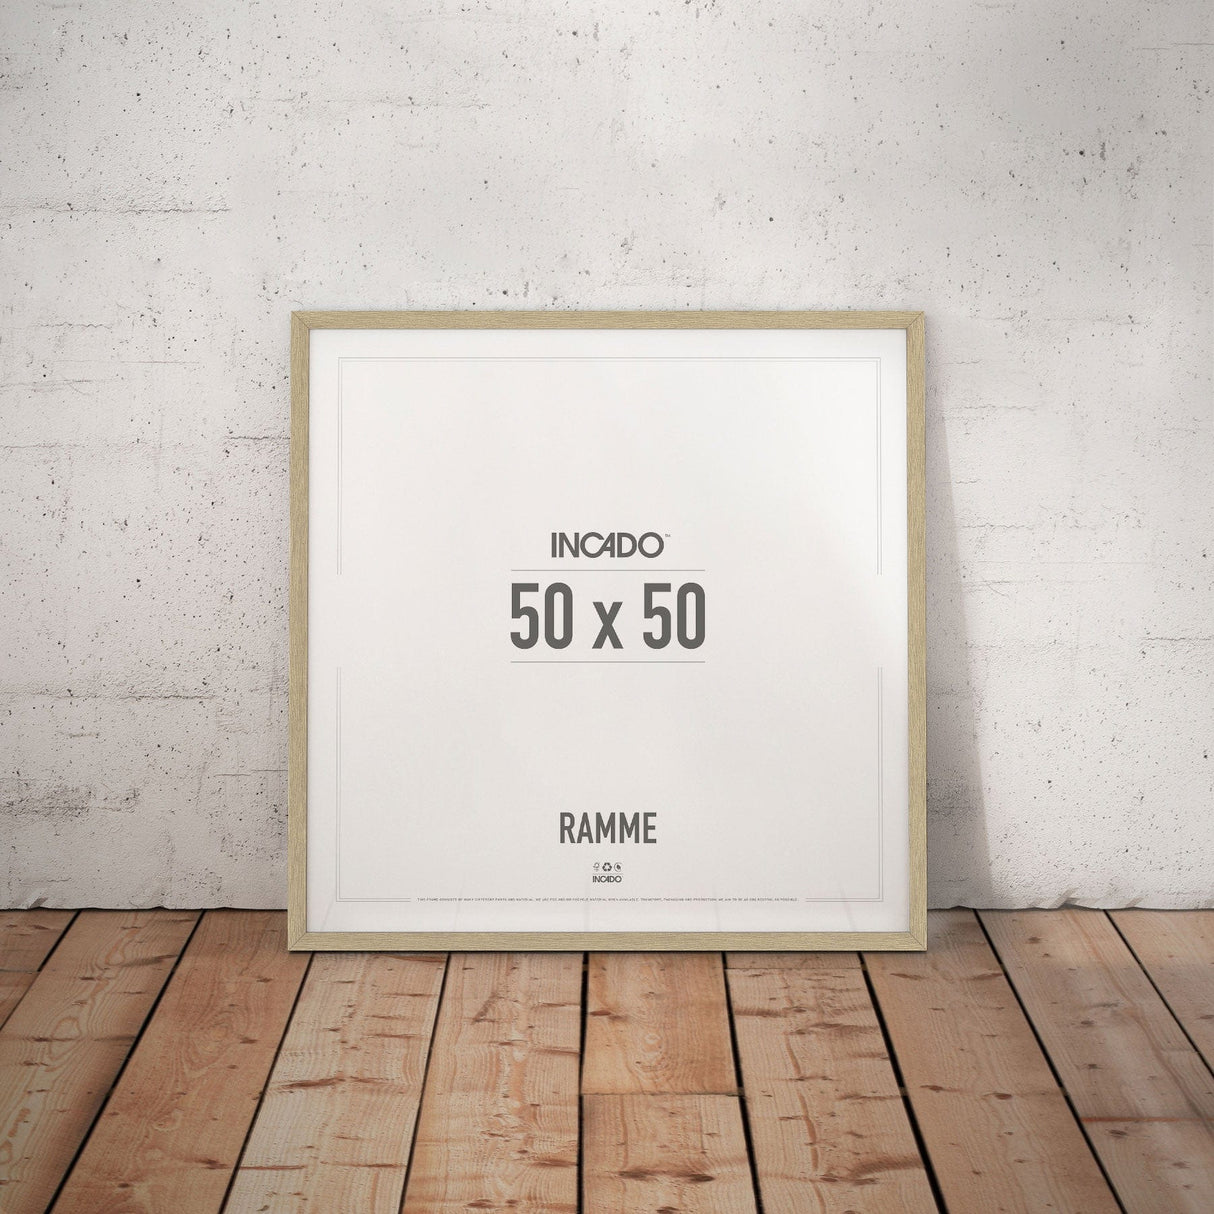 Eg - Ramme Incado NordicLine - 50 x 50 cm